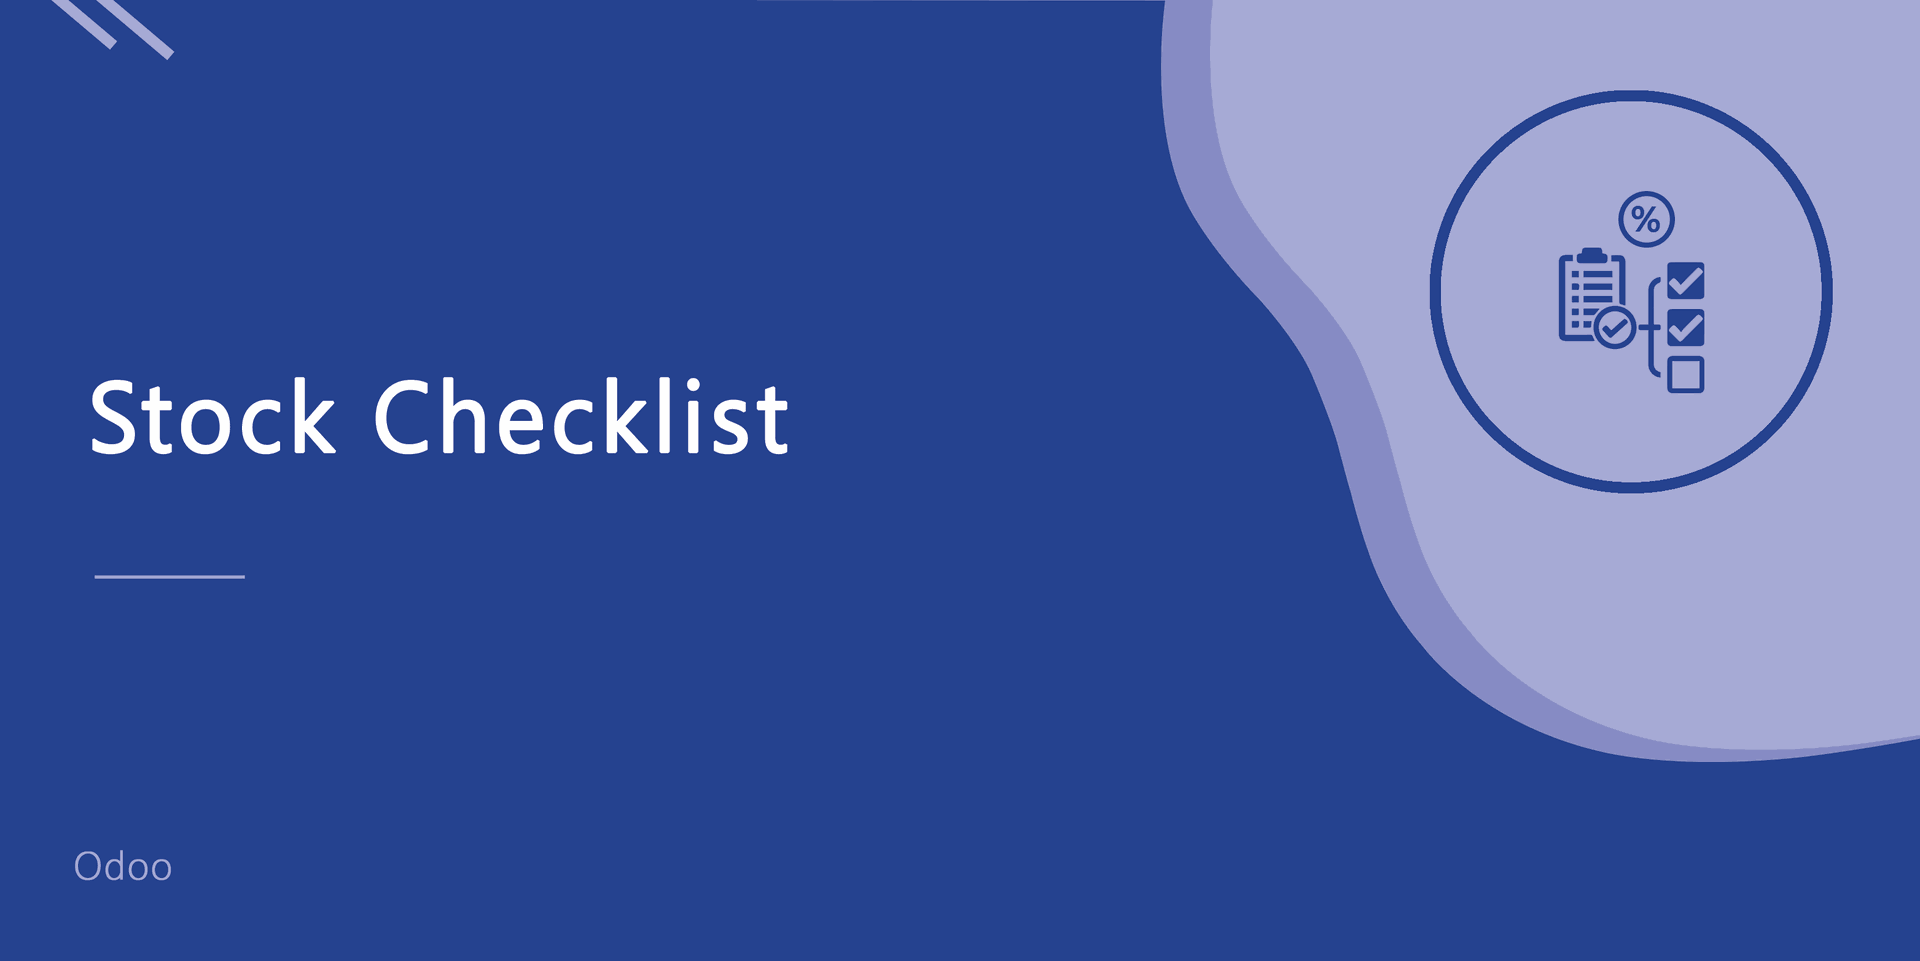 Stock Checklist
